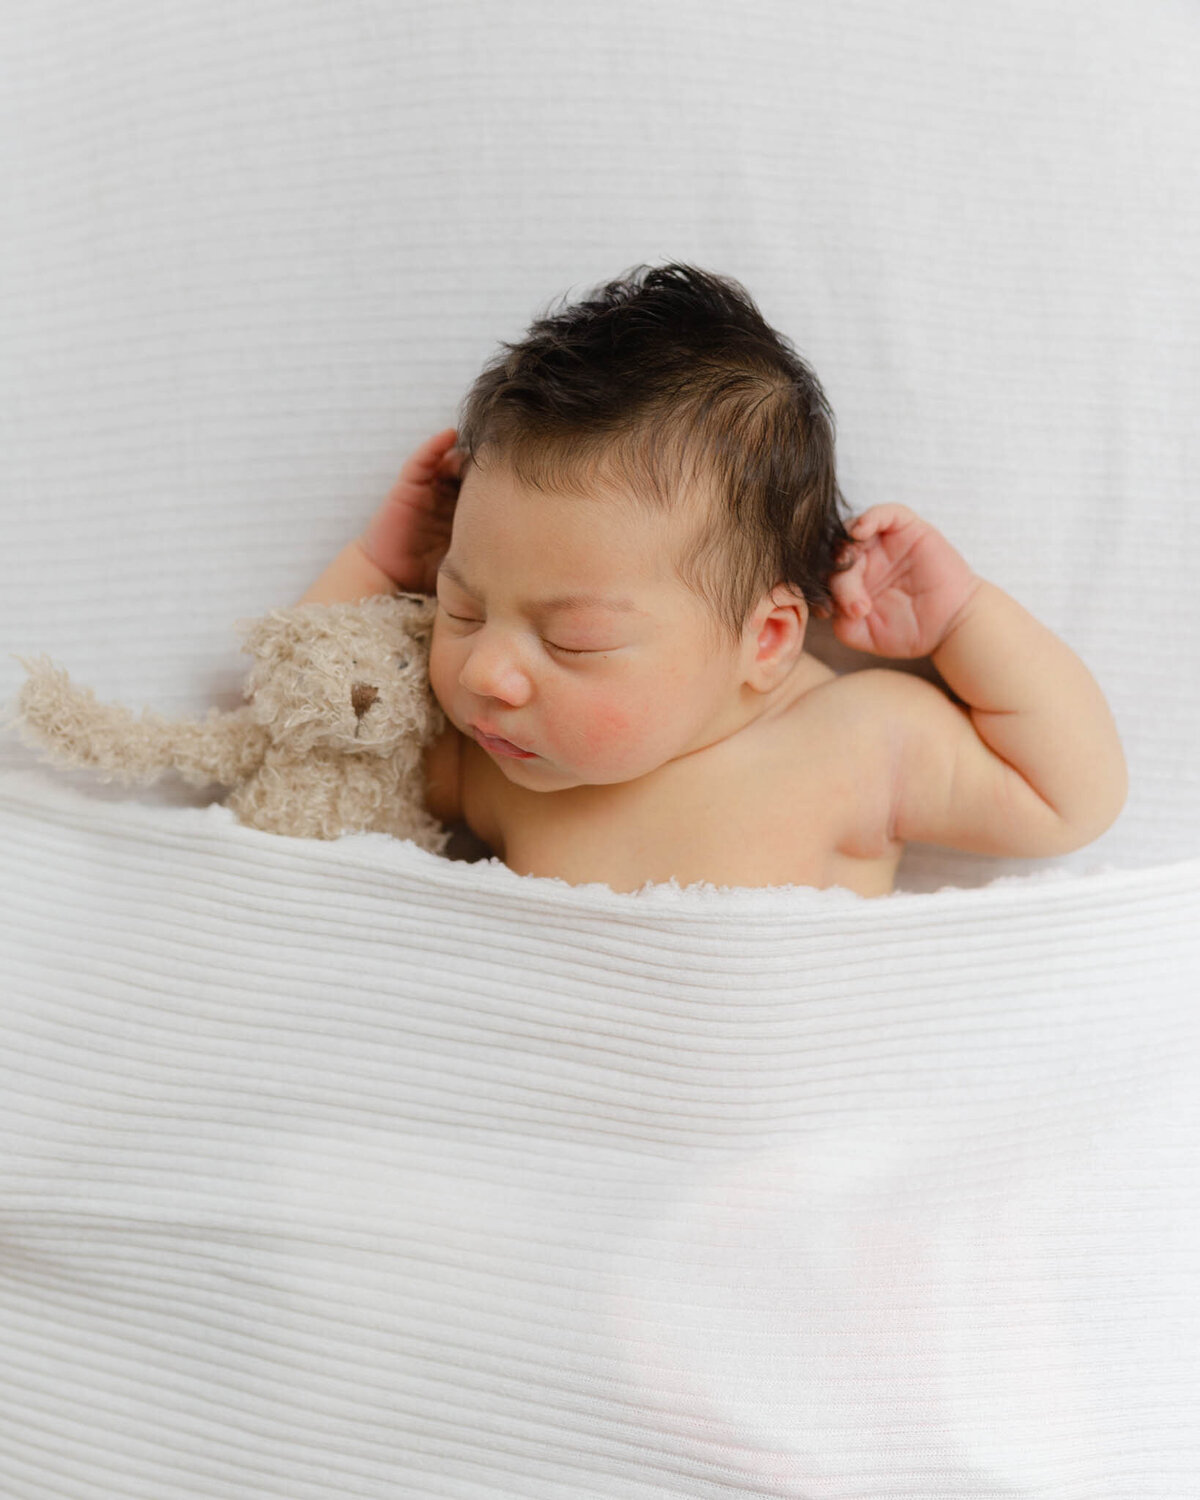 newborn baby sleeping on white with hands behind head